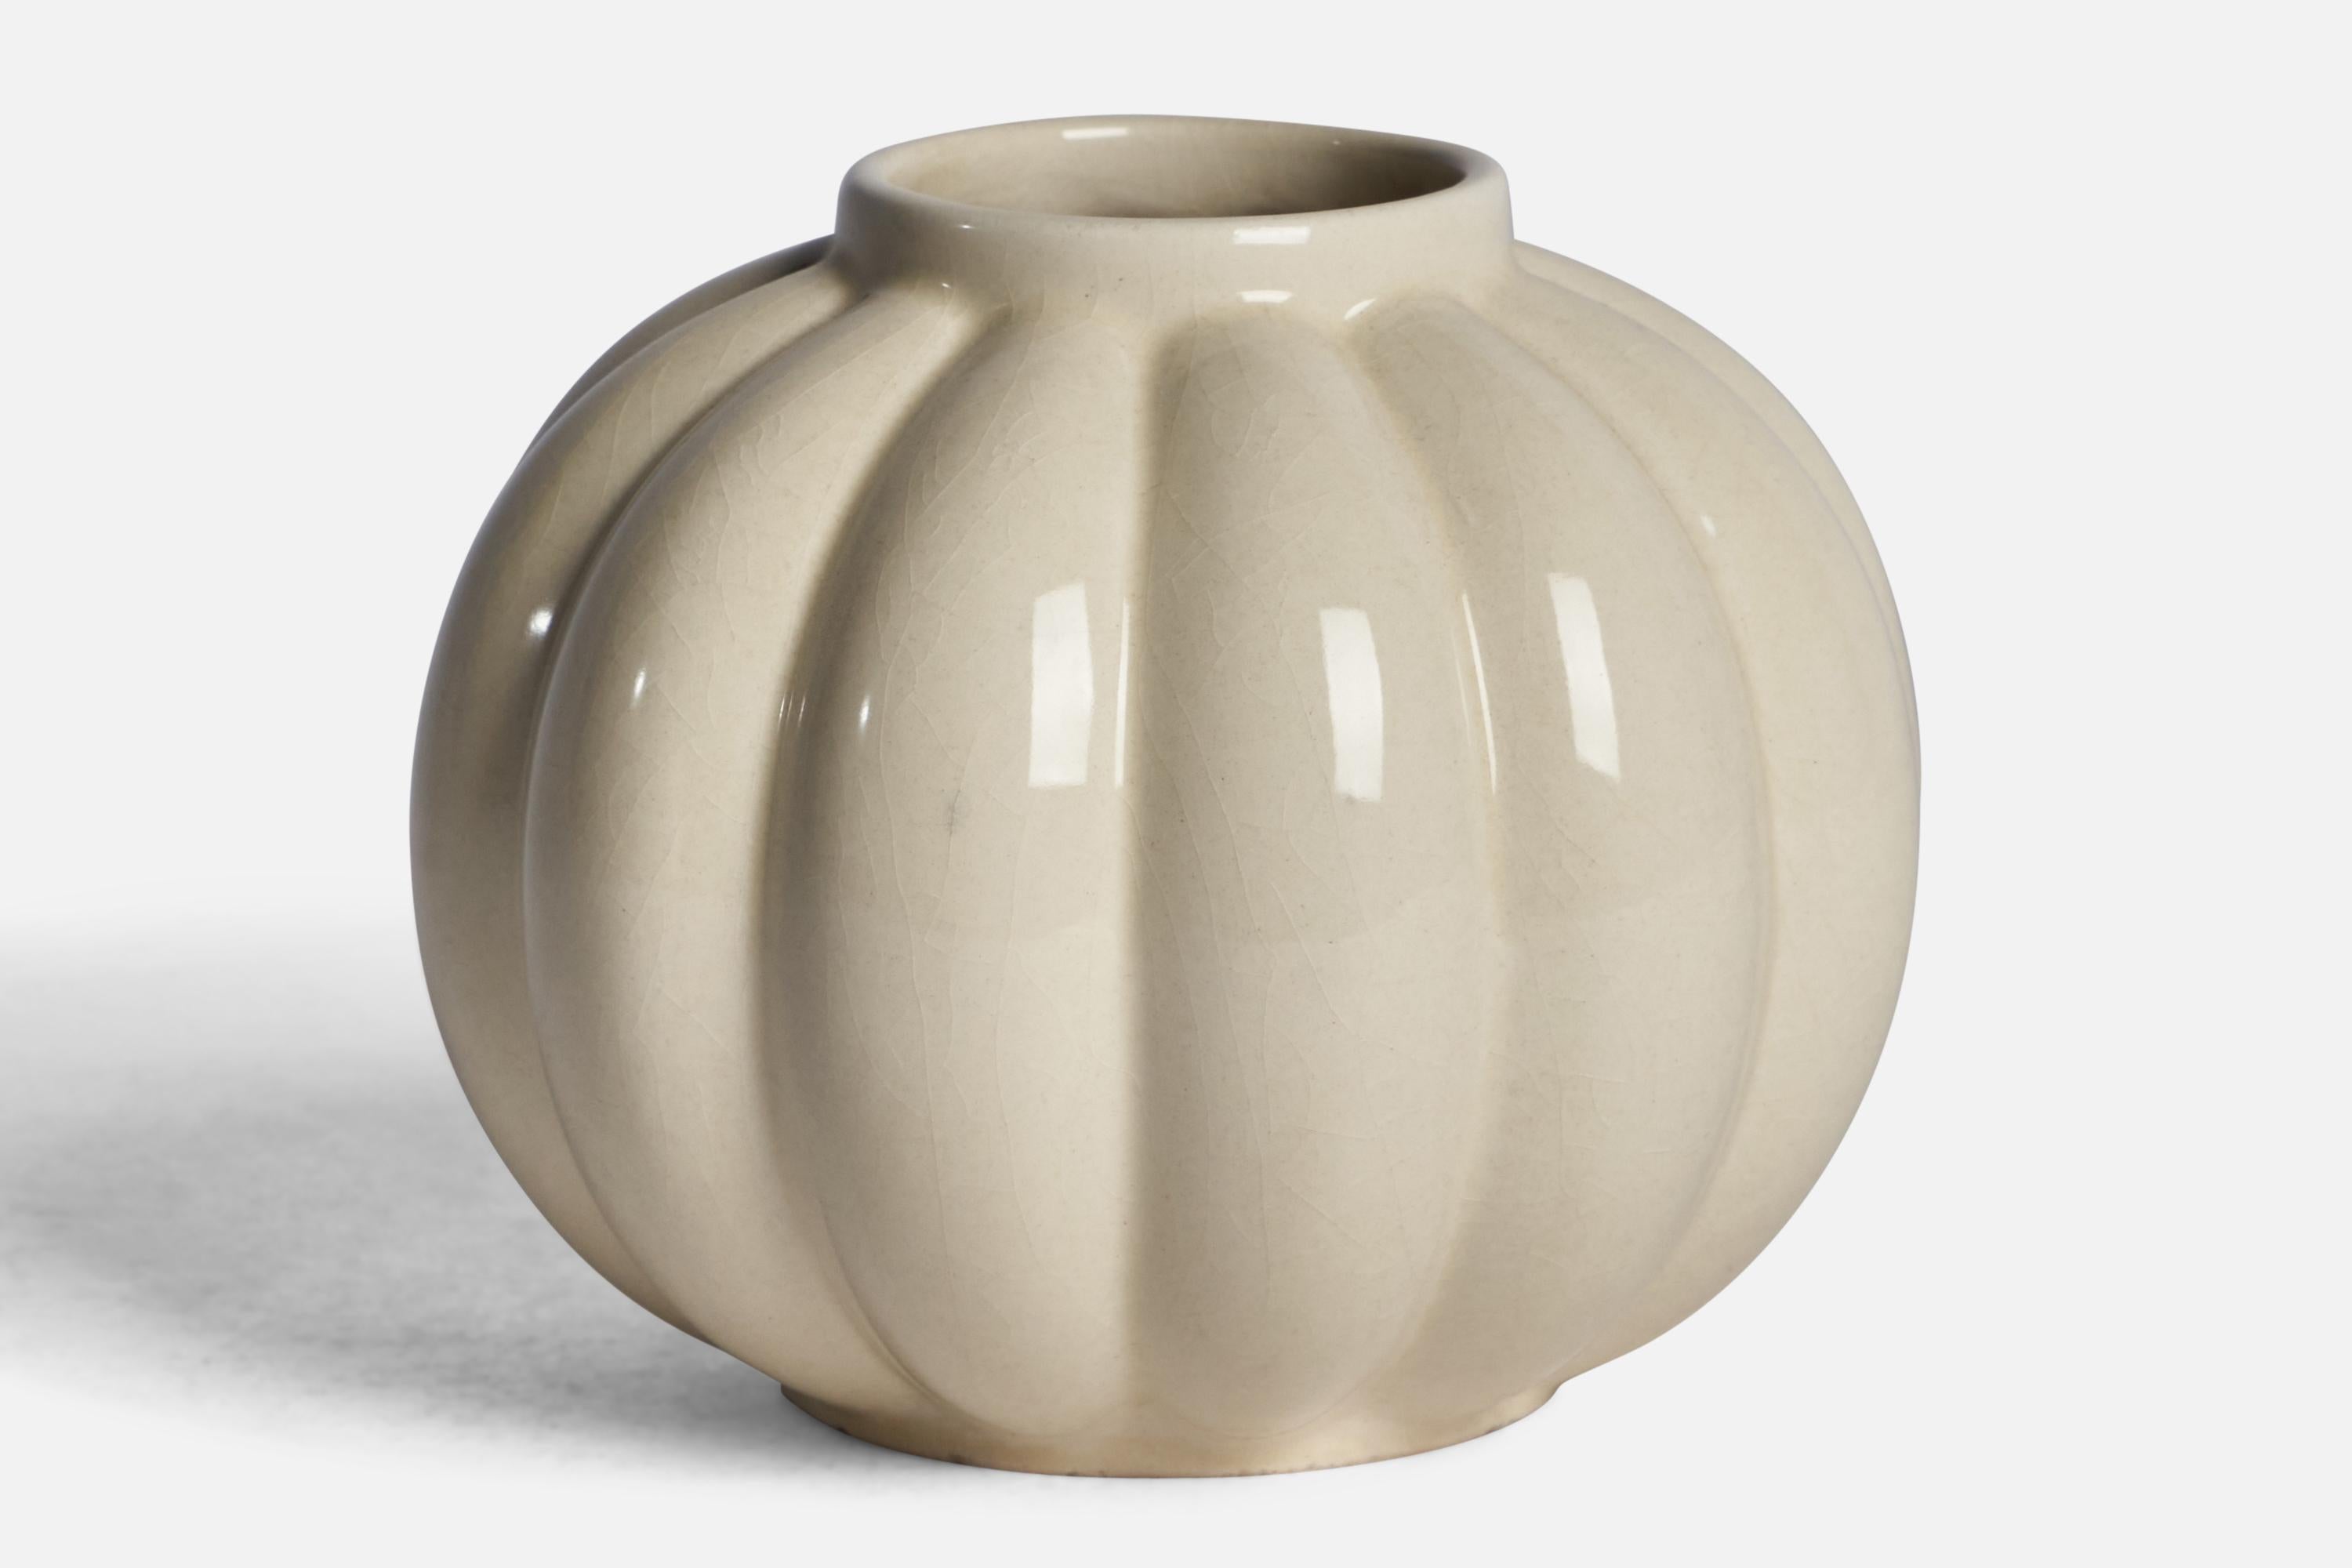 An off-white-glazed earthenware vase designed and produced by Upsala Ekeby, Sweden, 1930s.